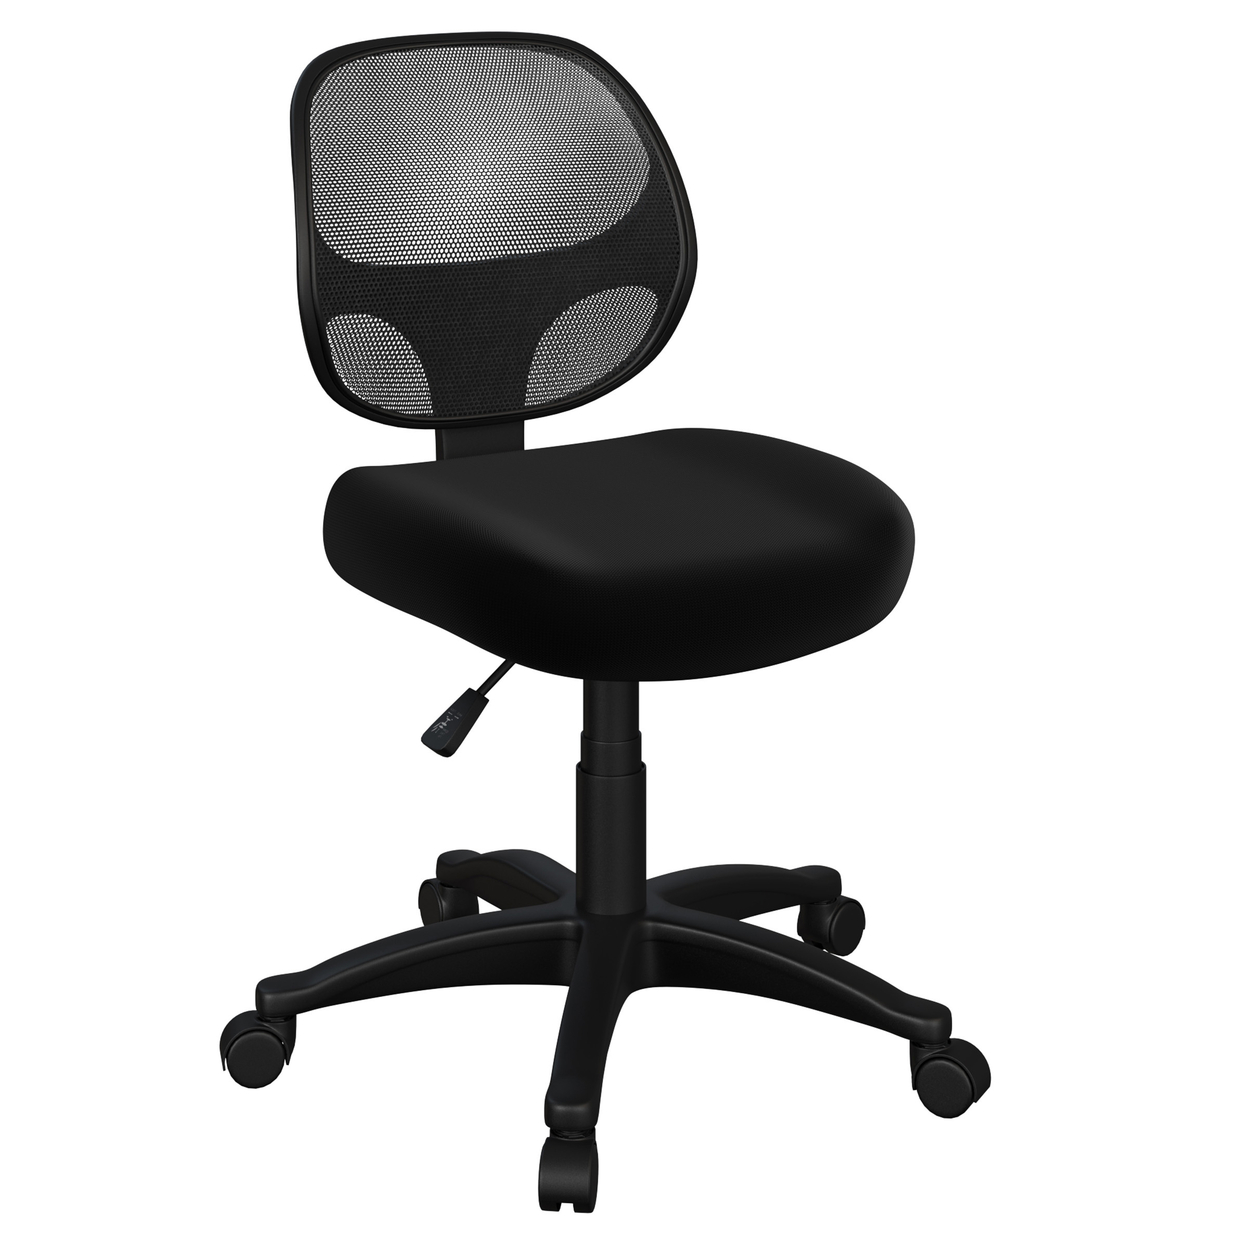 Armless Computer Office Chair Adjustable Height Wheels Foam Seat 360 Degree Swivel